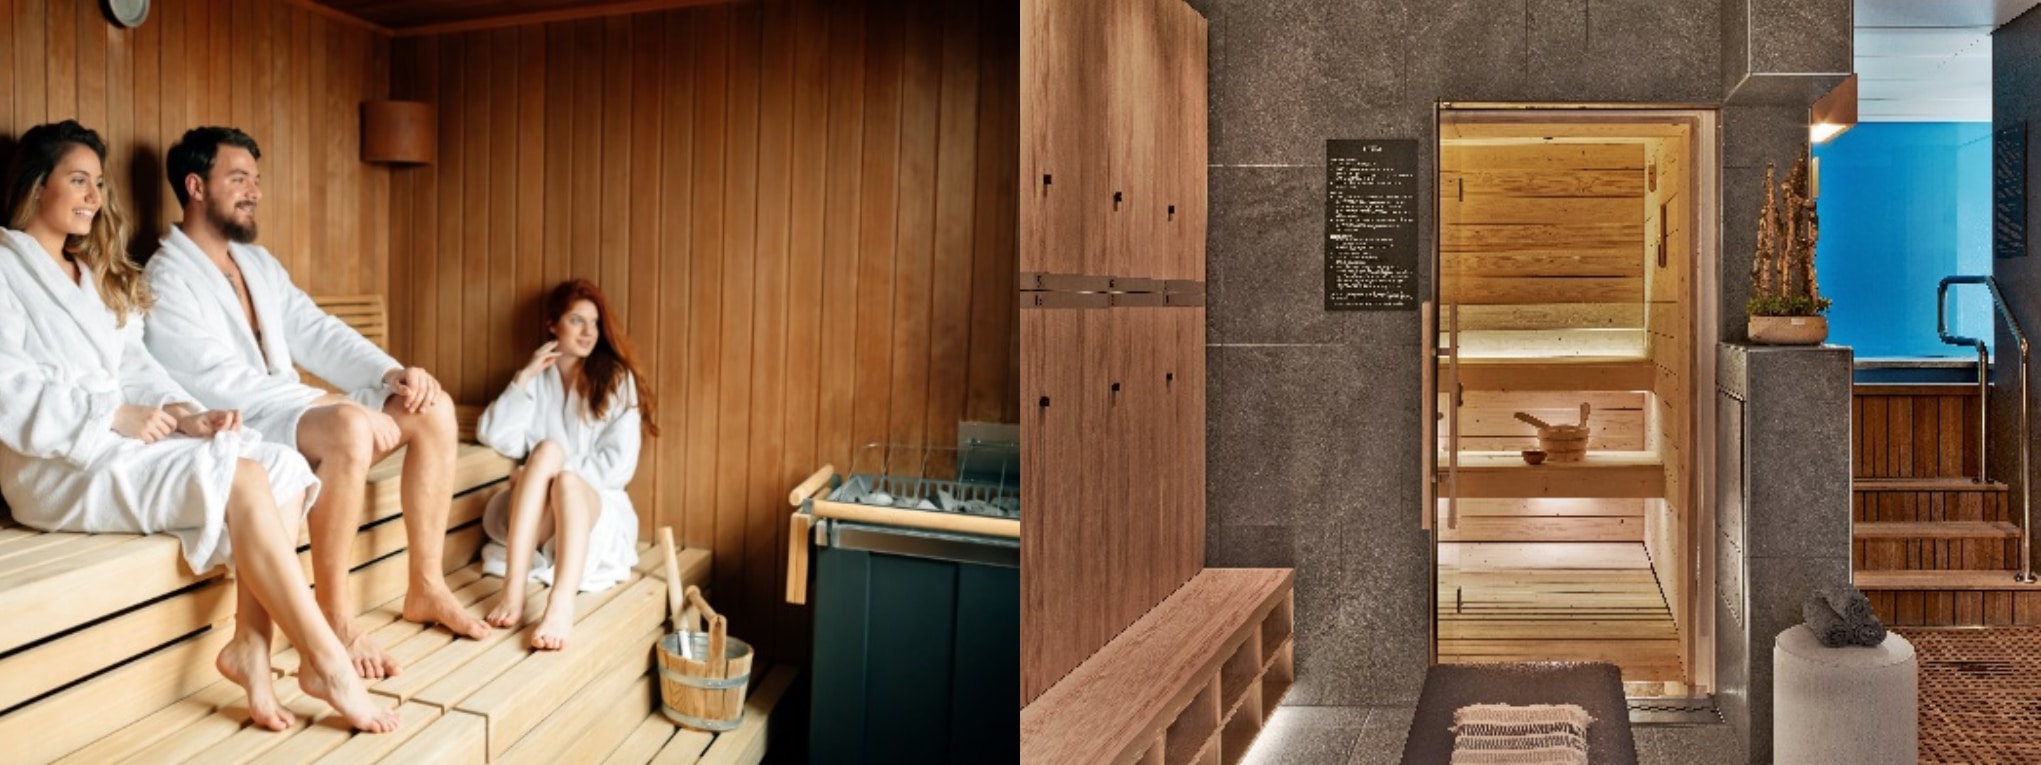 LivNordic & Sauna From Finland Collaborate to Create the True Sauna Experience - ...